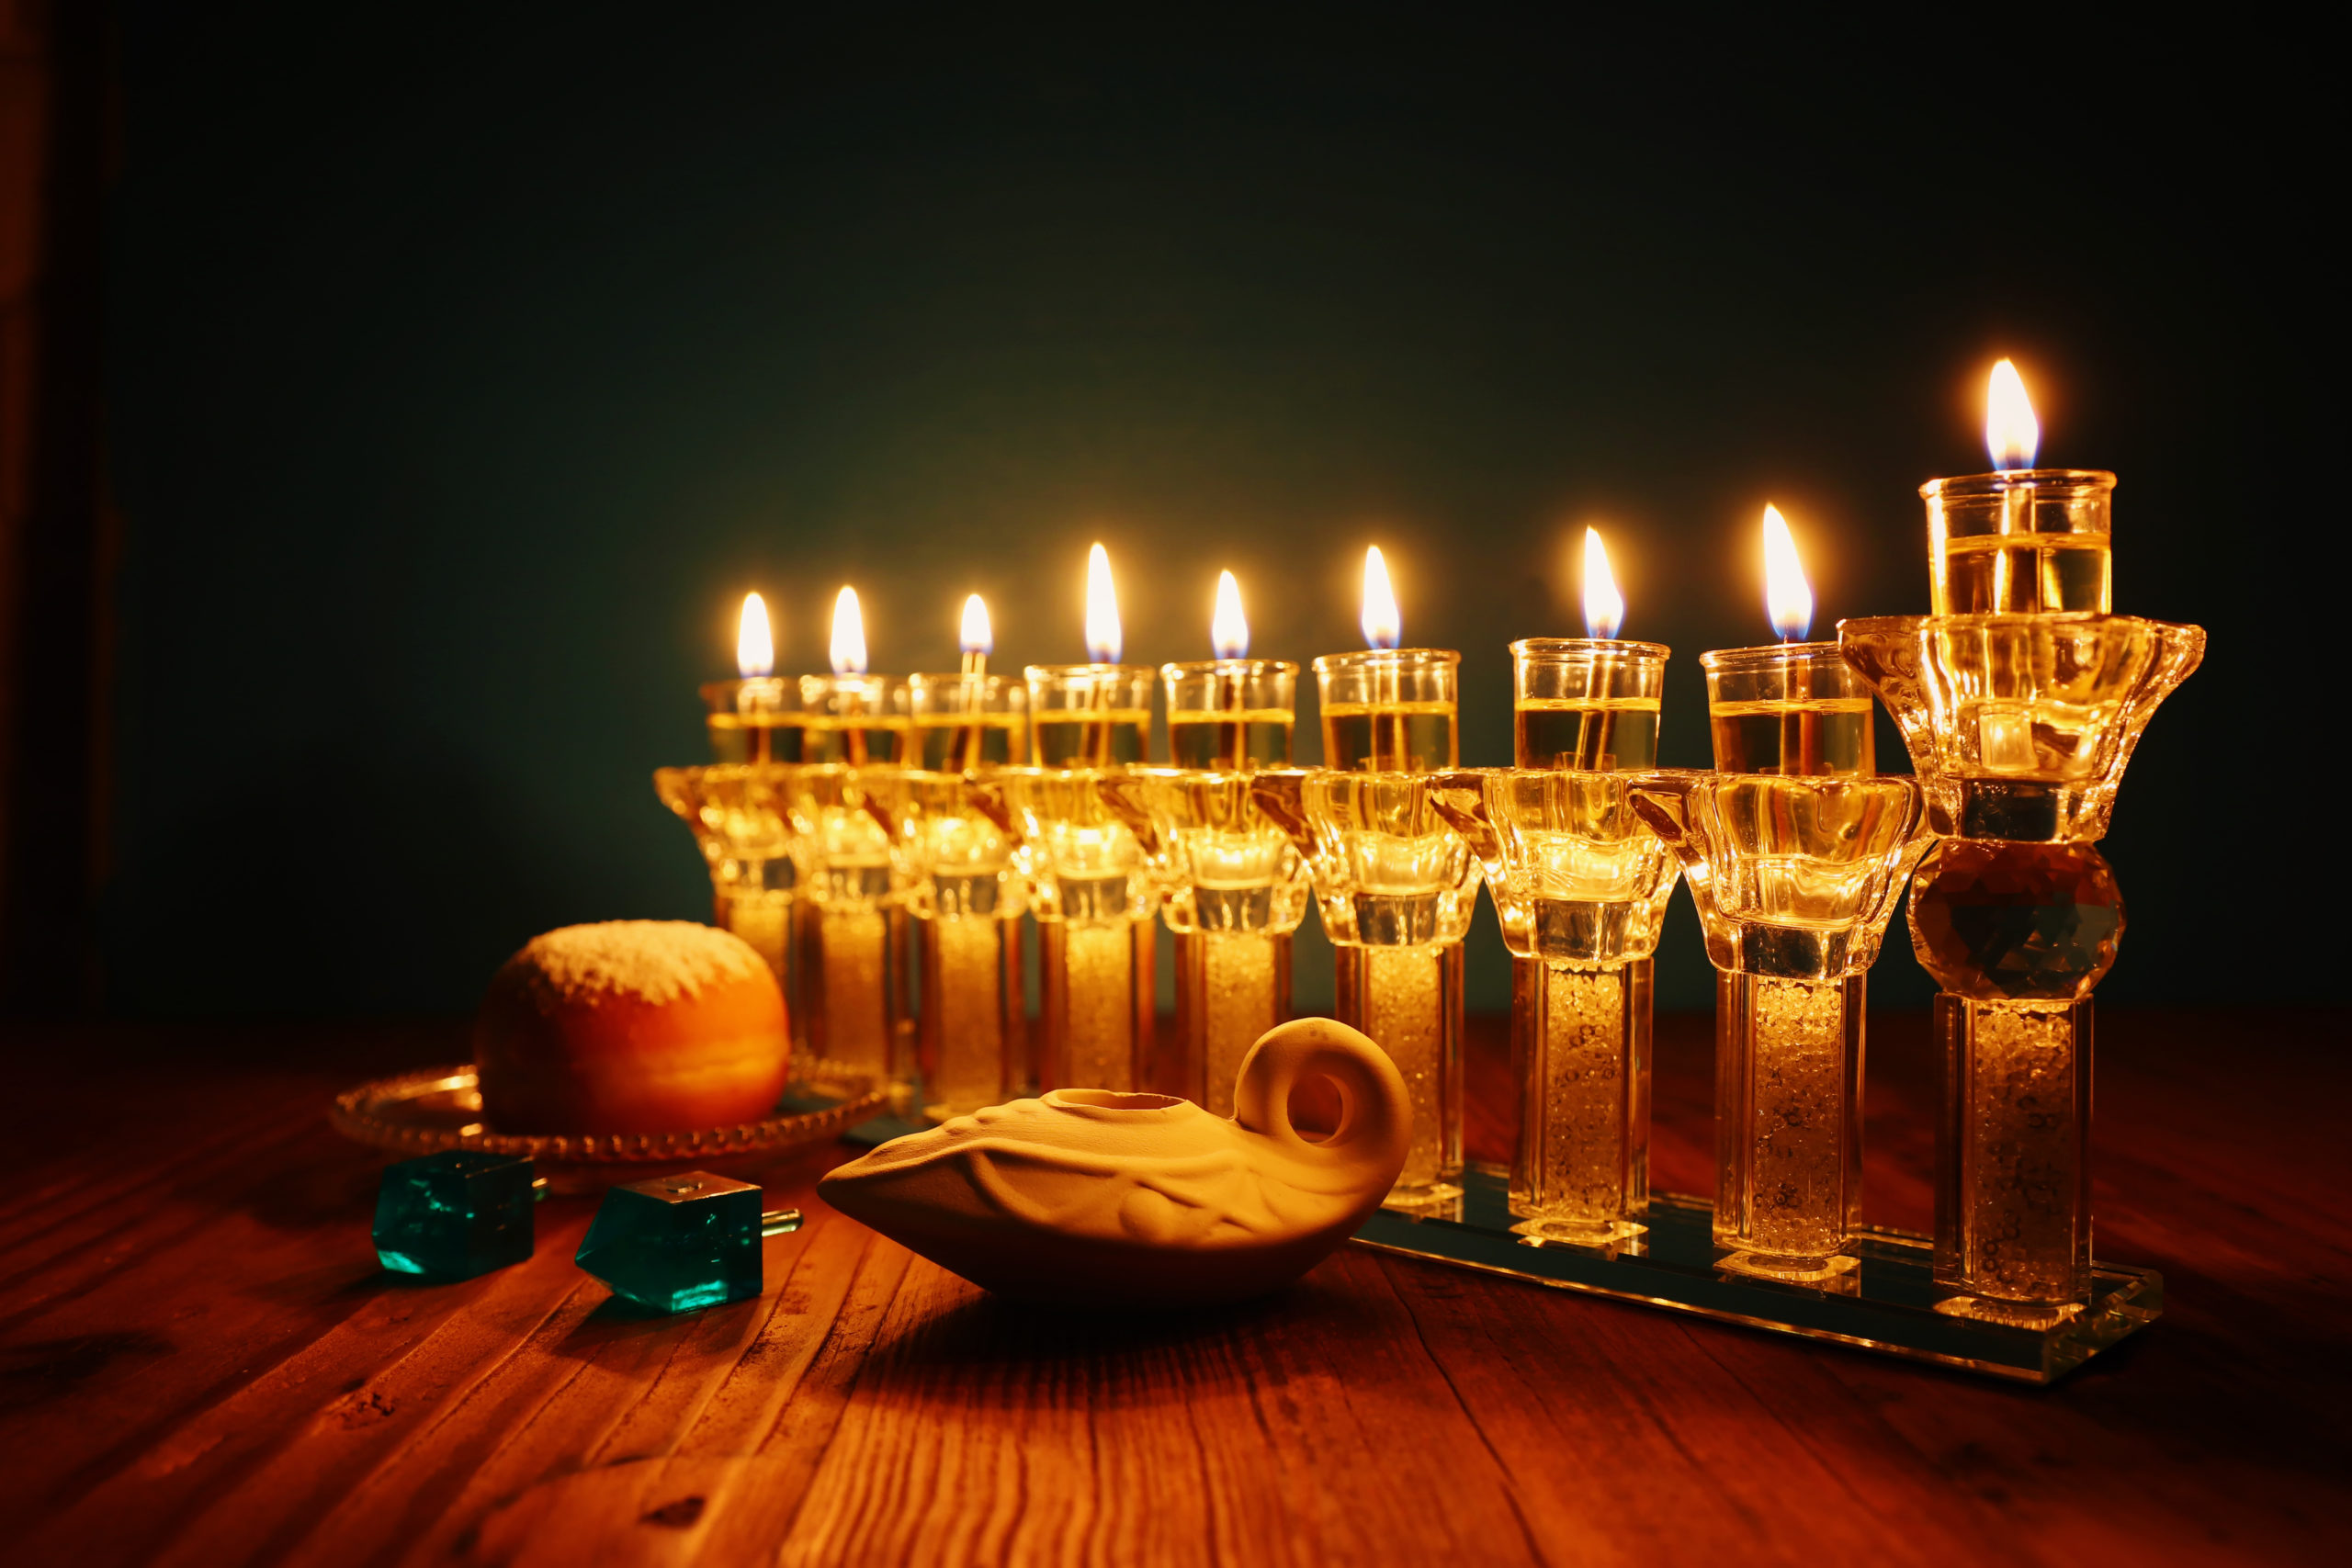 Image,Of,Jewish,Holiday,Hanukkah,Background,With,Crystal,Menorah,(traditional